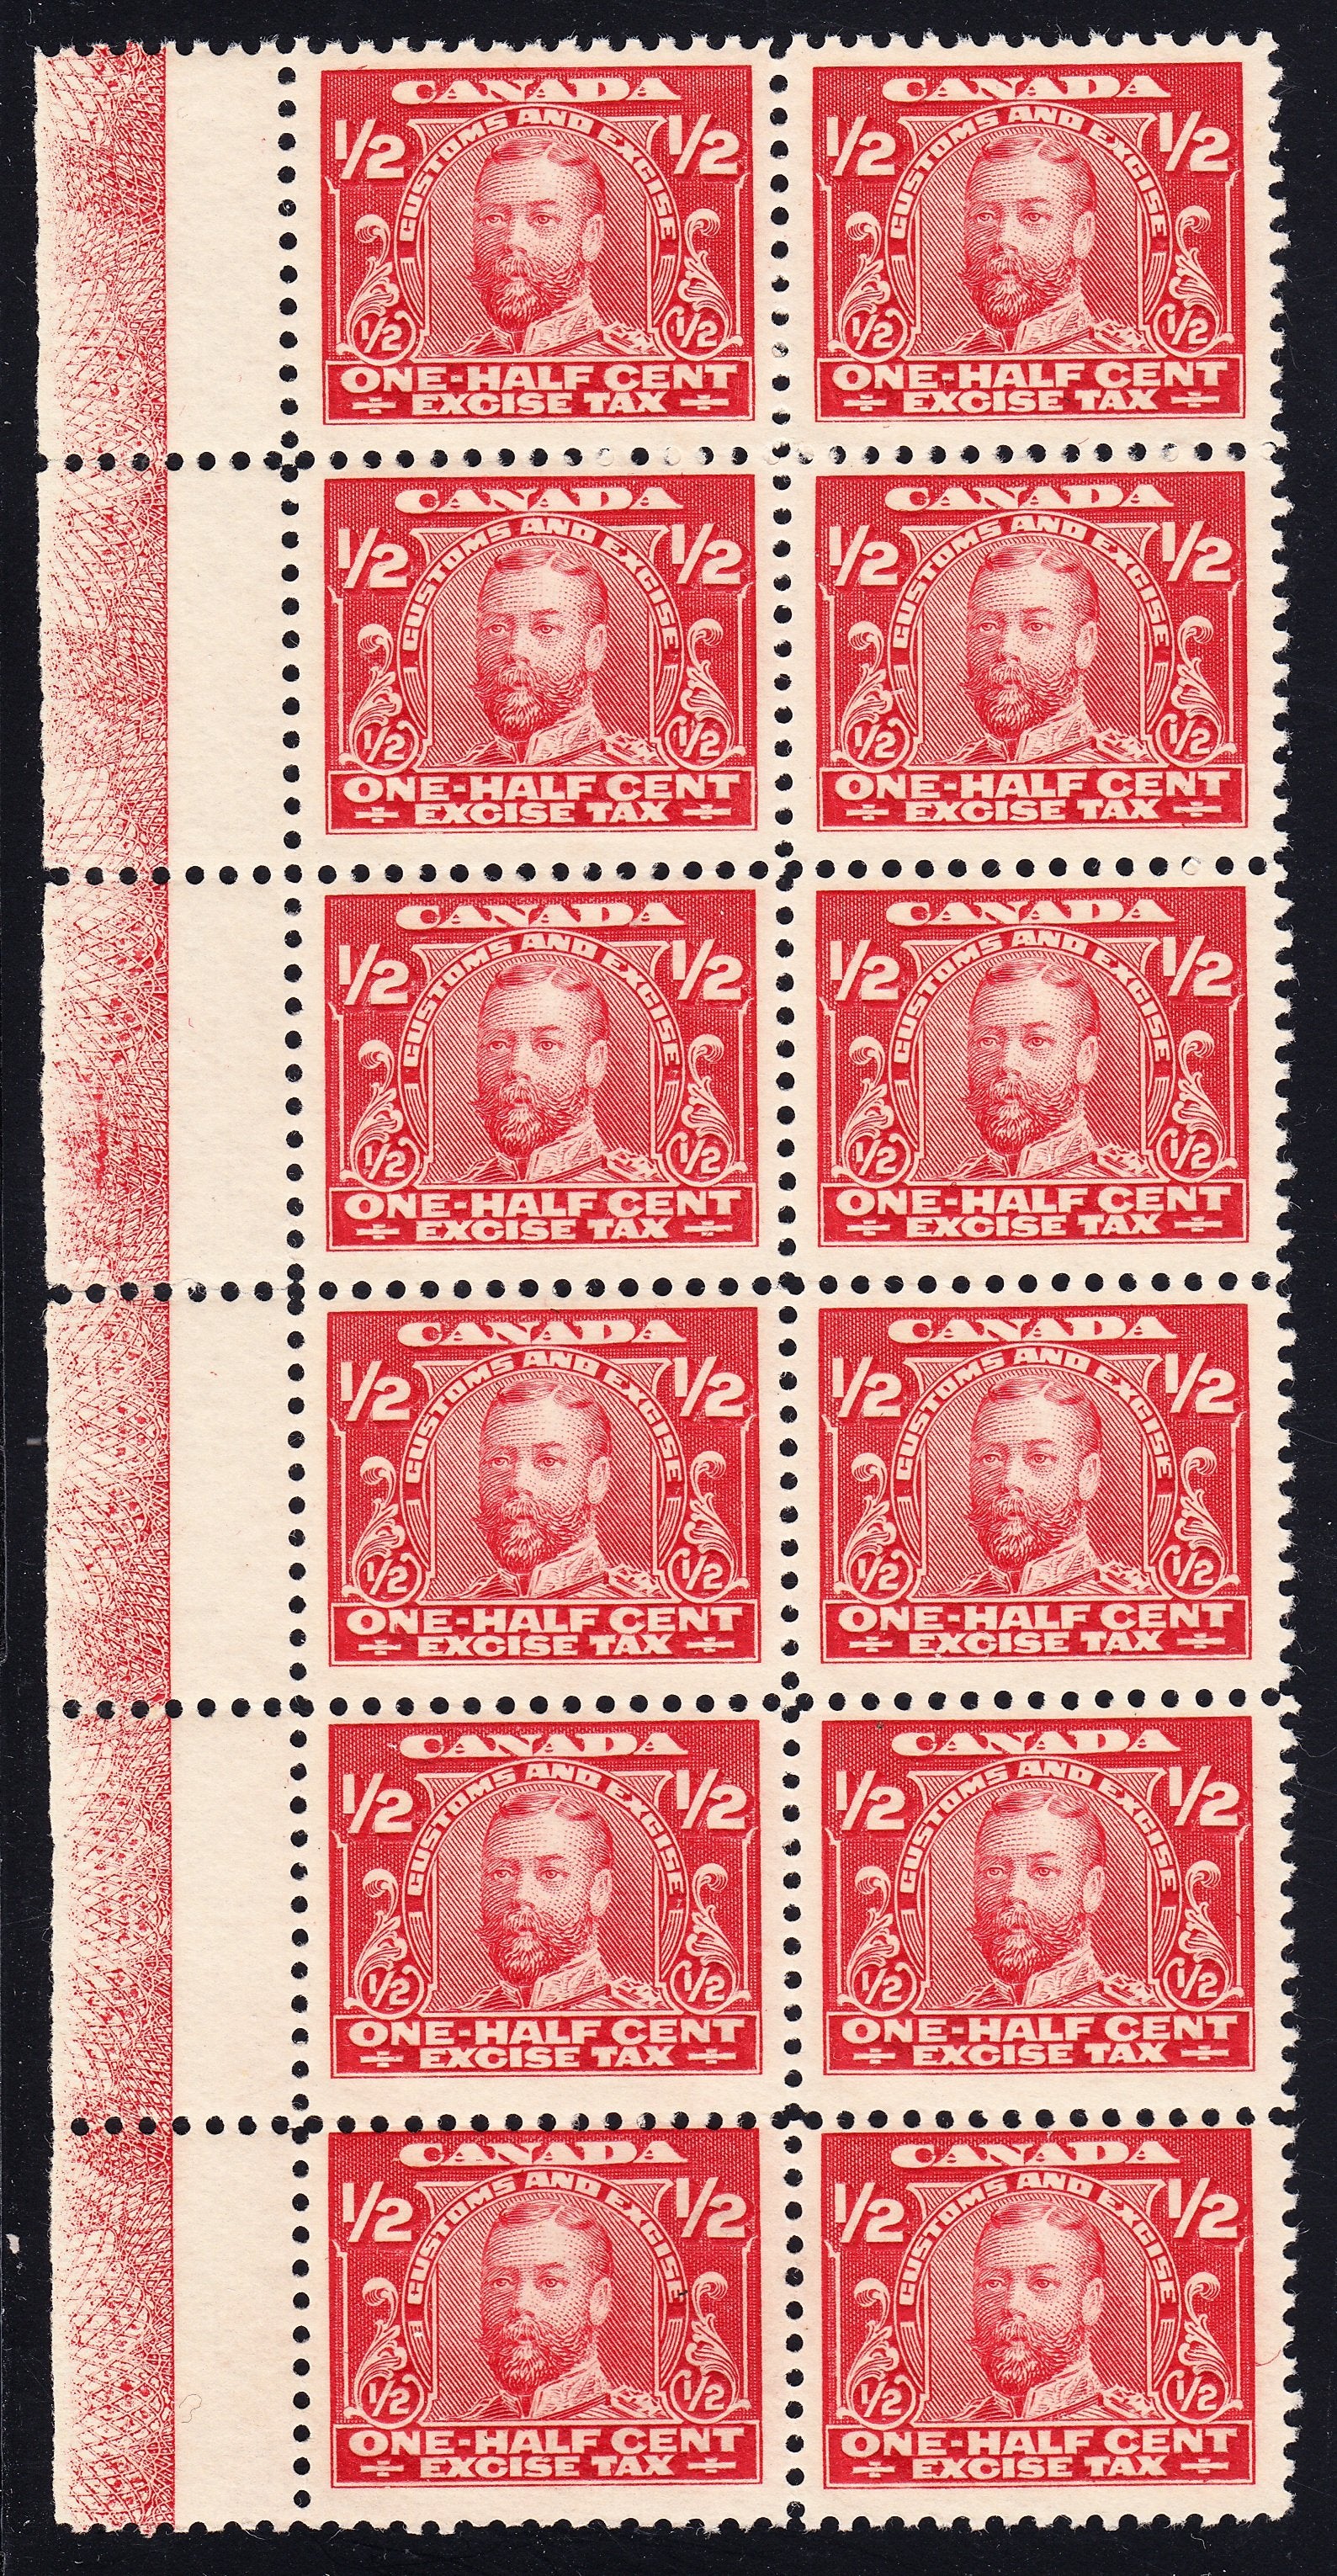 0002FX1708 - FX2 - Mint Lathework Block of 12 - Deveney Stamps Ltd. Canadian Stamps